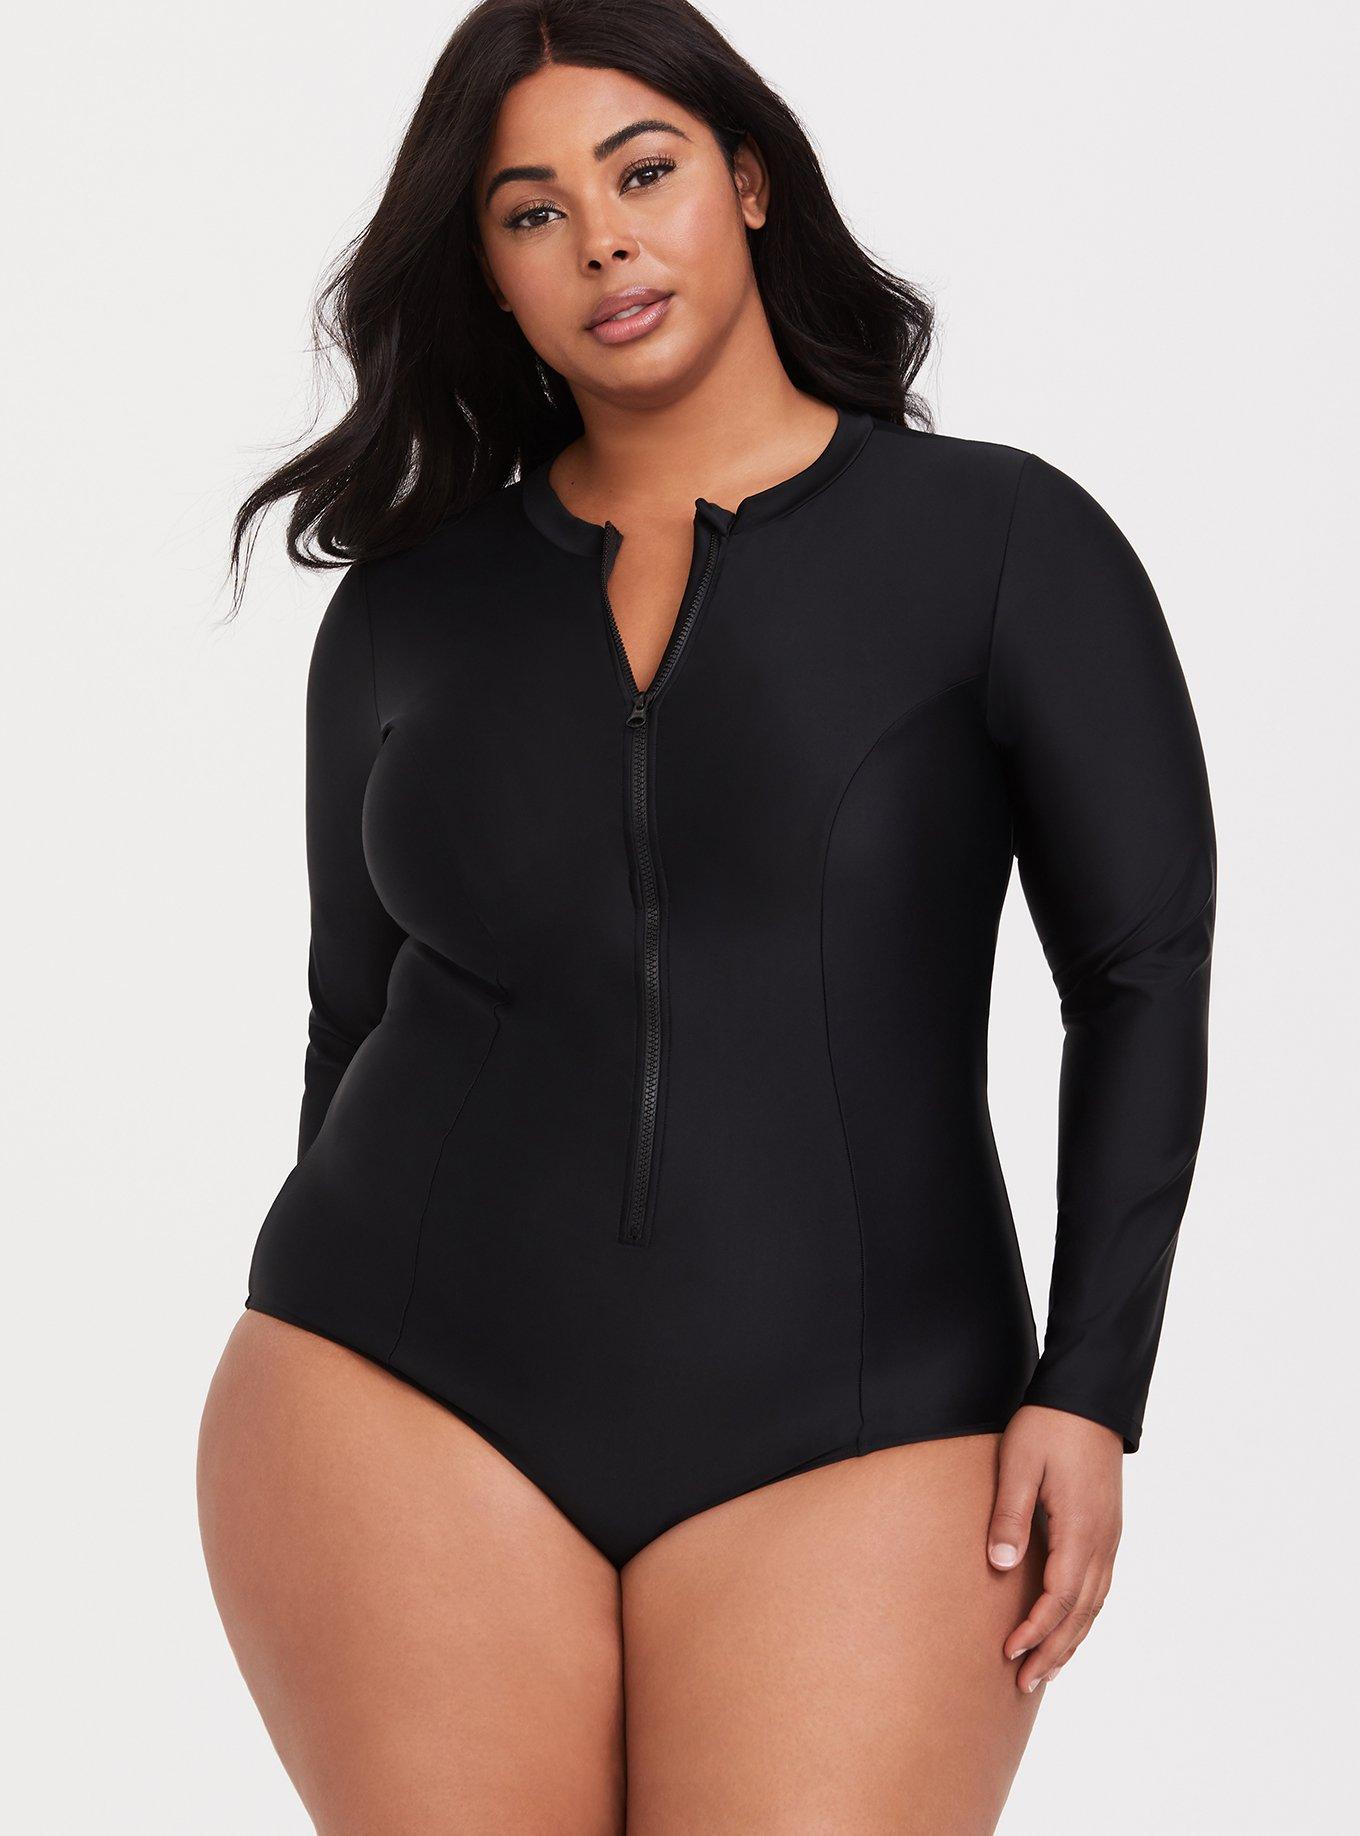 Plus Size Swimsuits Sleeves  Plus Size Swimwear Women Black - Plus Size  Bikini - Aliexpress